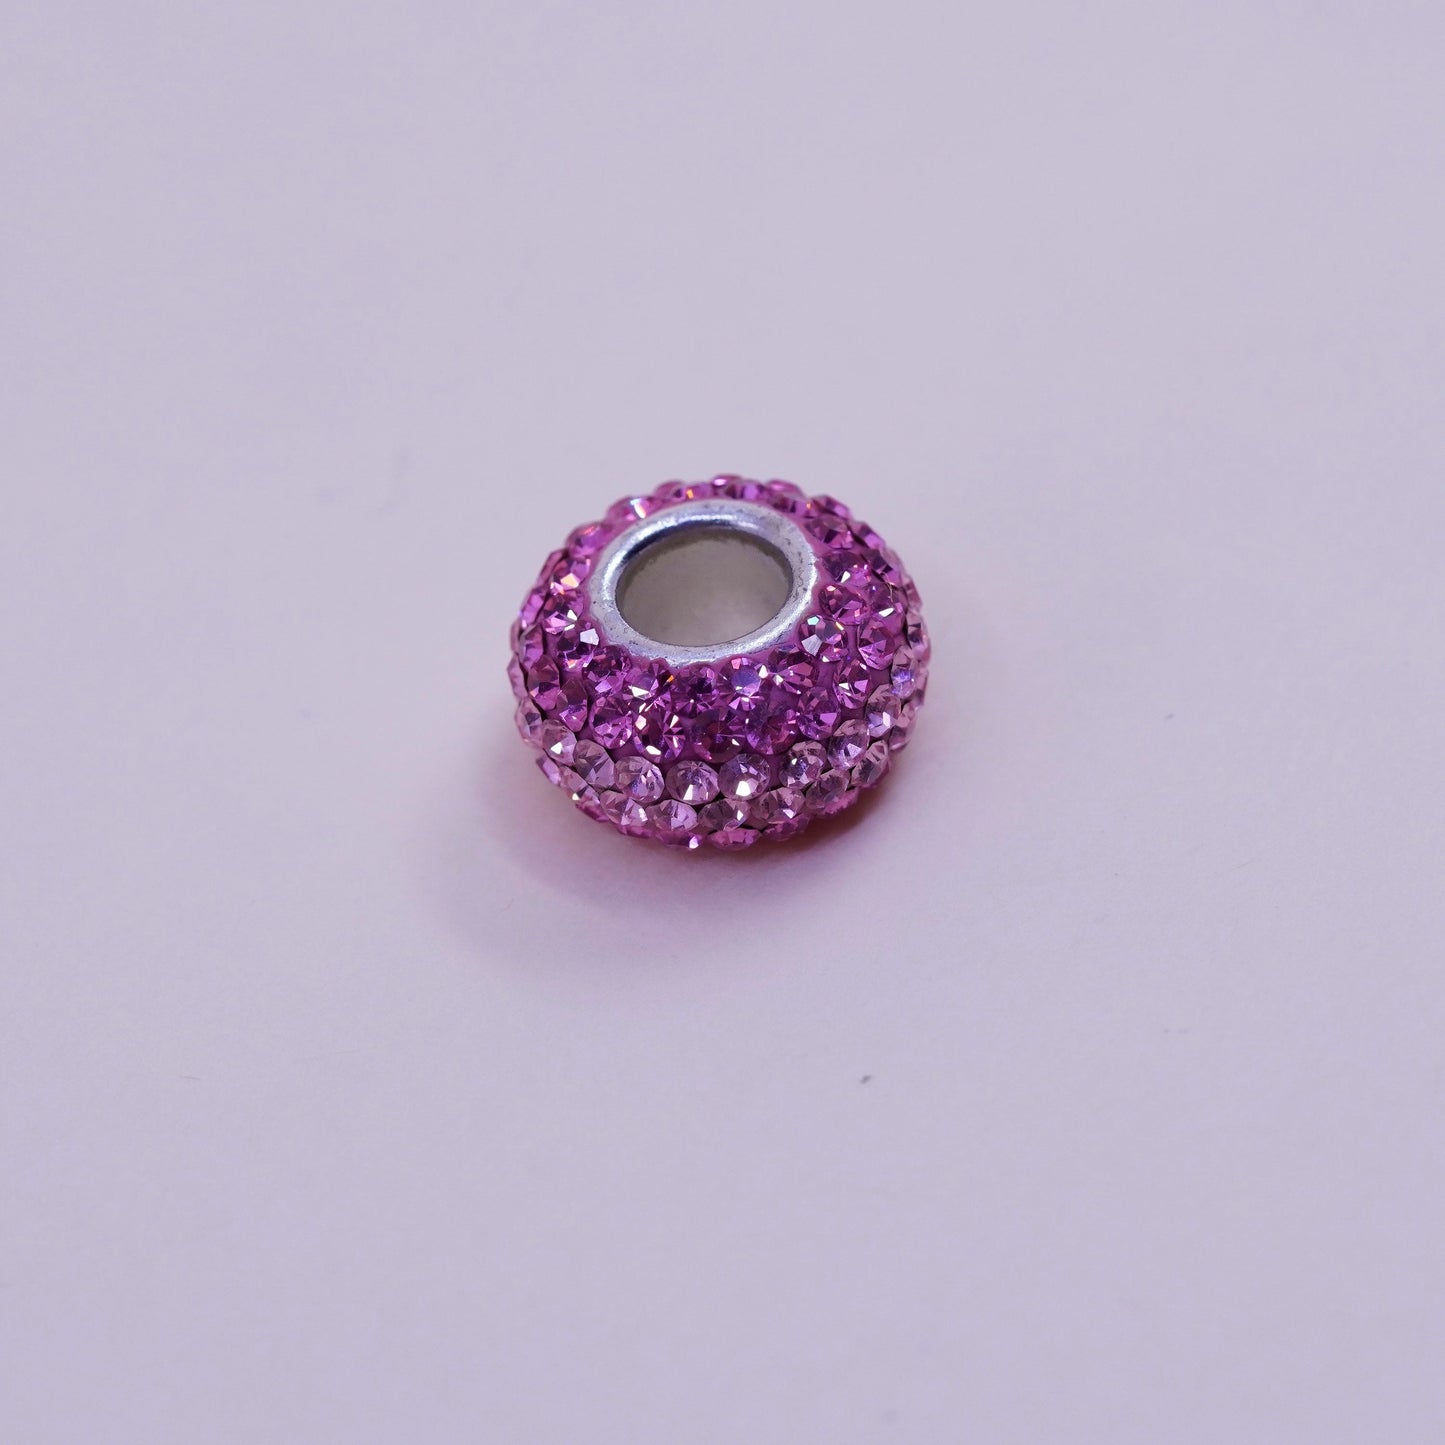 Vintage sterling silver handmade pendant, 925 bead charm cluster pink crystal